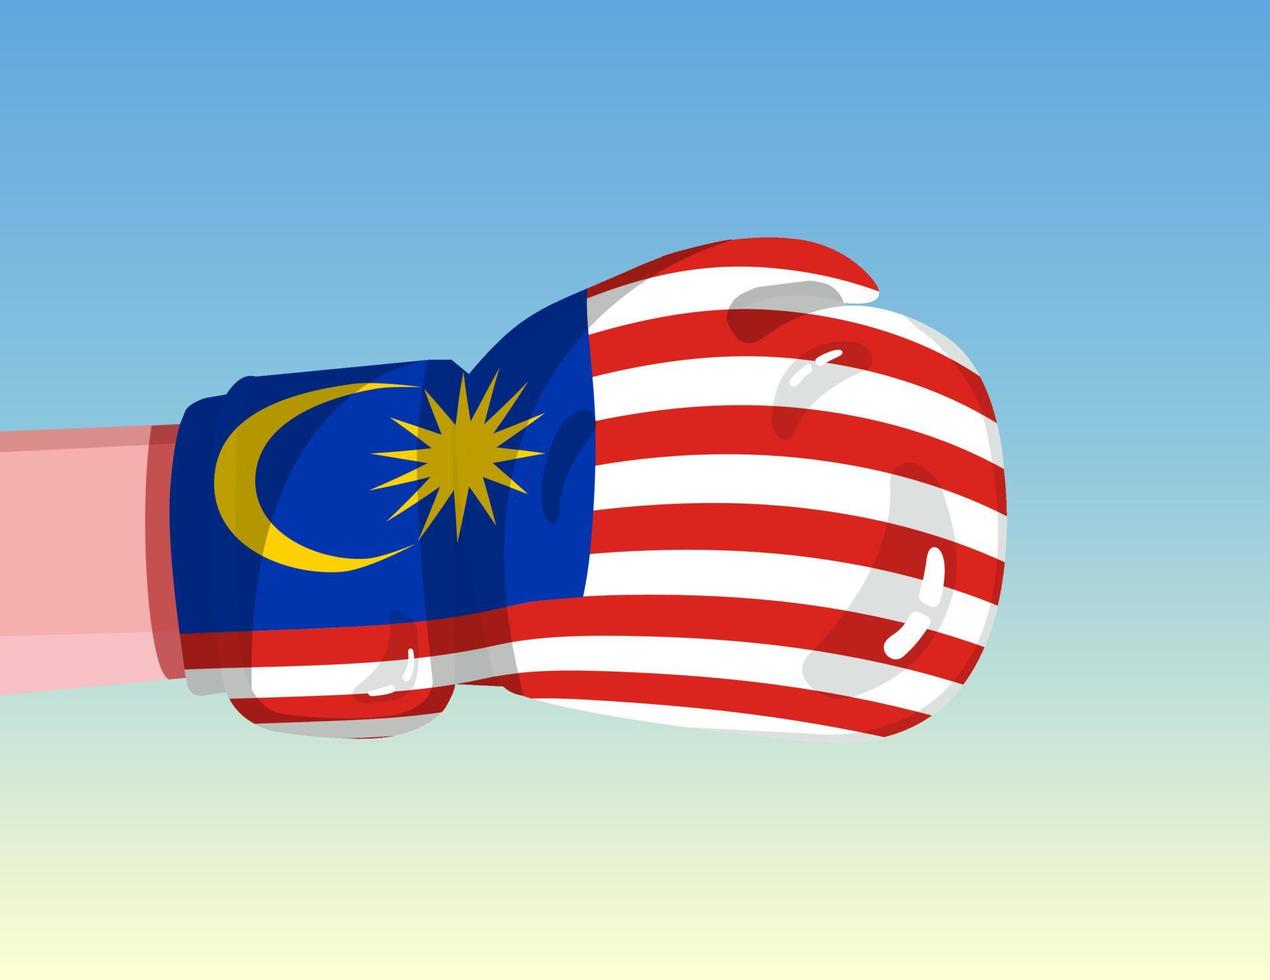 bandera de malasia en guante de boxeo. confrontación entre países con poder competitivo. actitud ofensiva separación del poder. diseño listo para la plantilla. vector